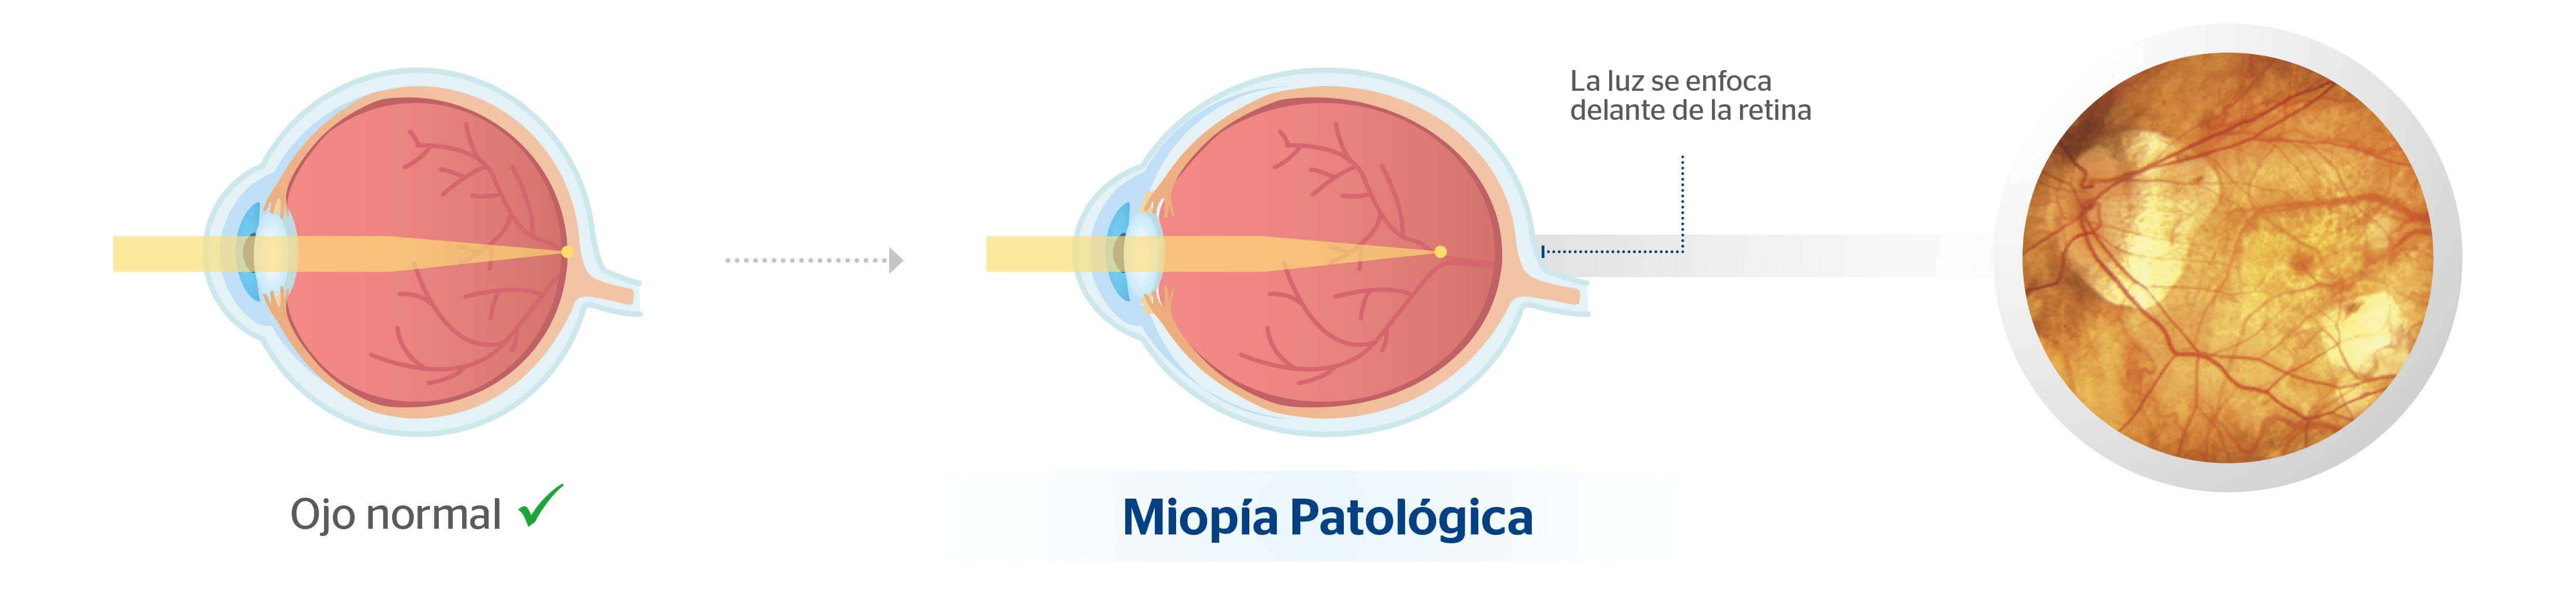 retina miopia magna icoane oftalmolog